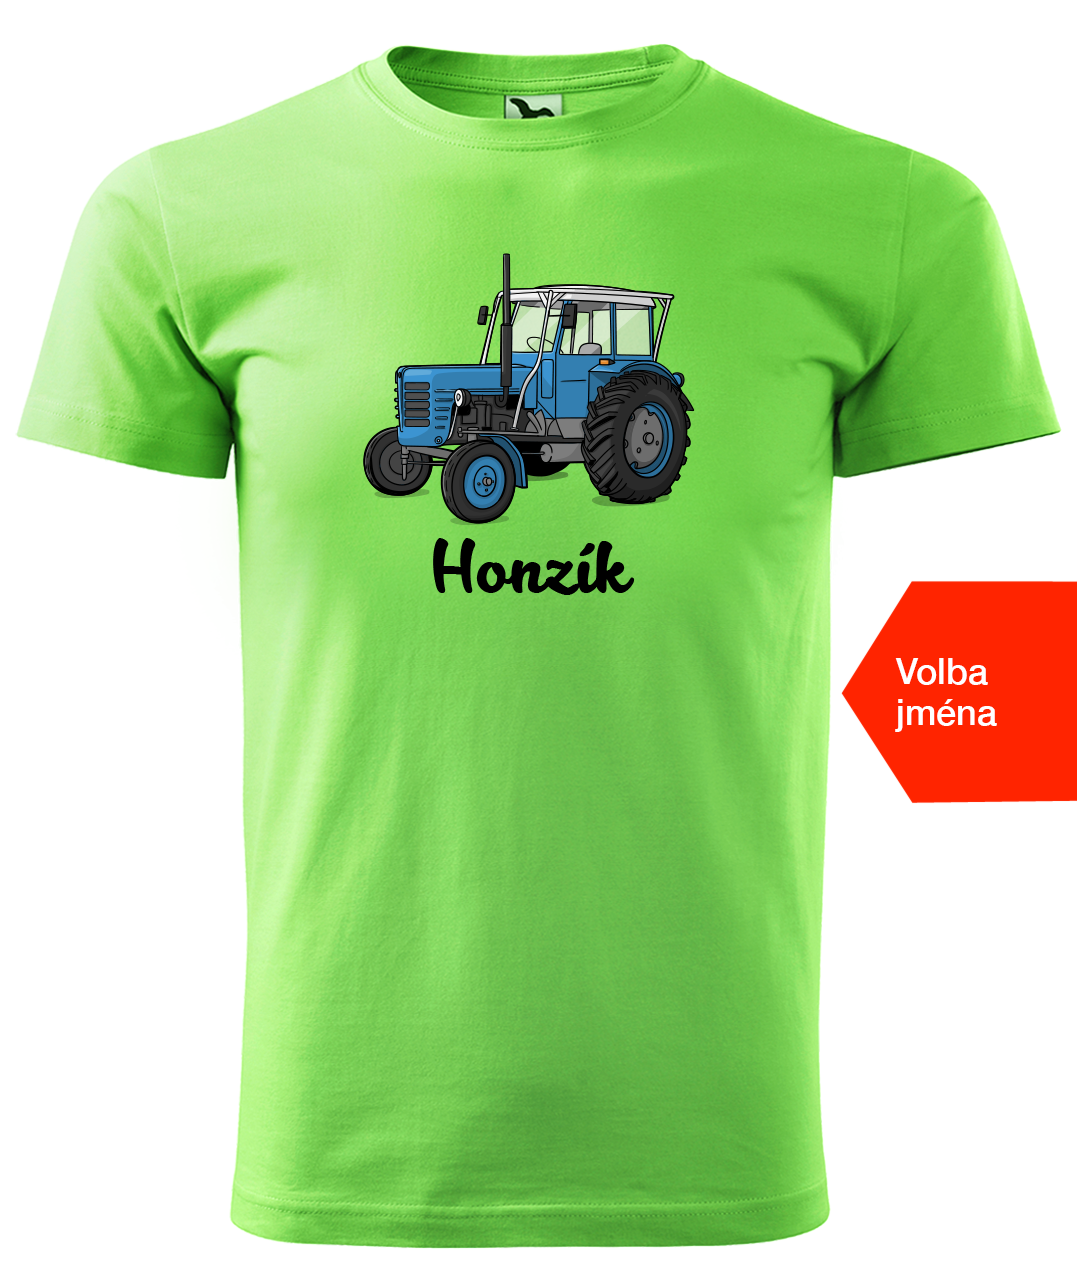 Dětské tričko s traktorem a jménem - Starý traktor Velikost: 8 let / 134 cm, Barva: Apple Green (92)